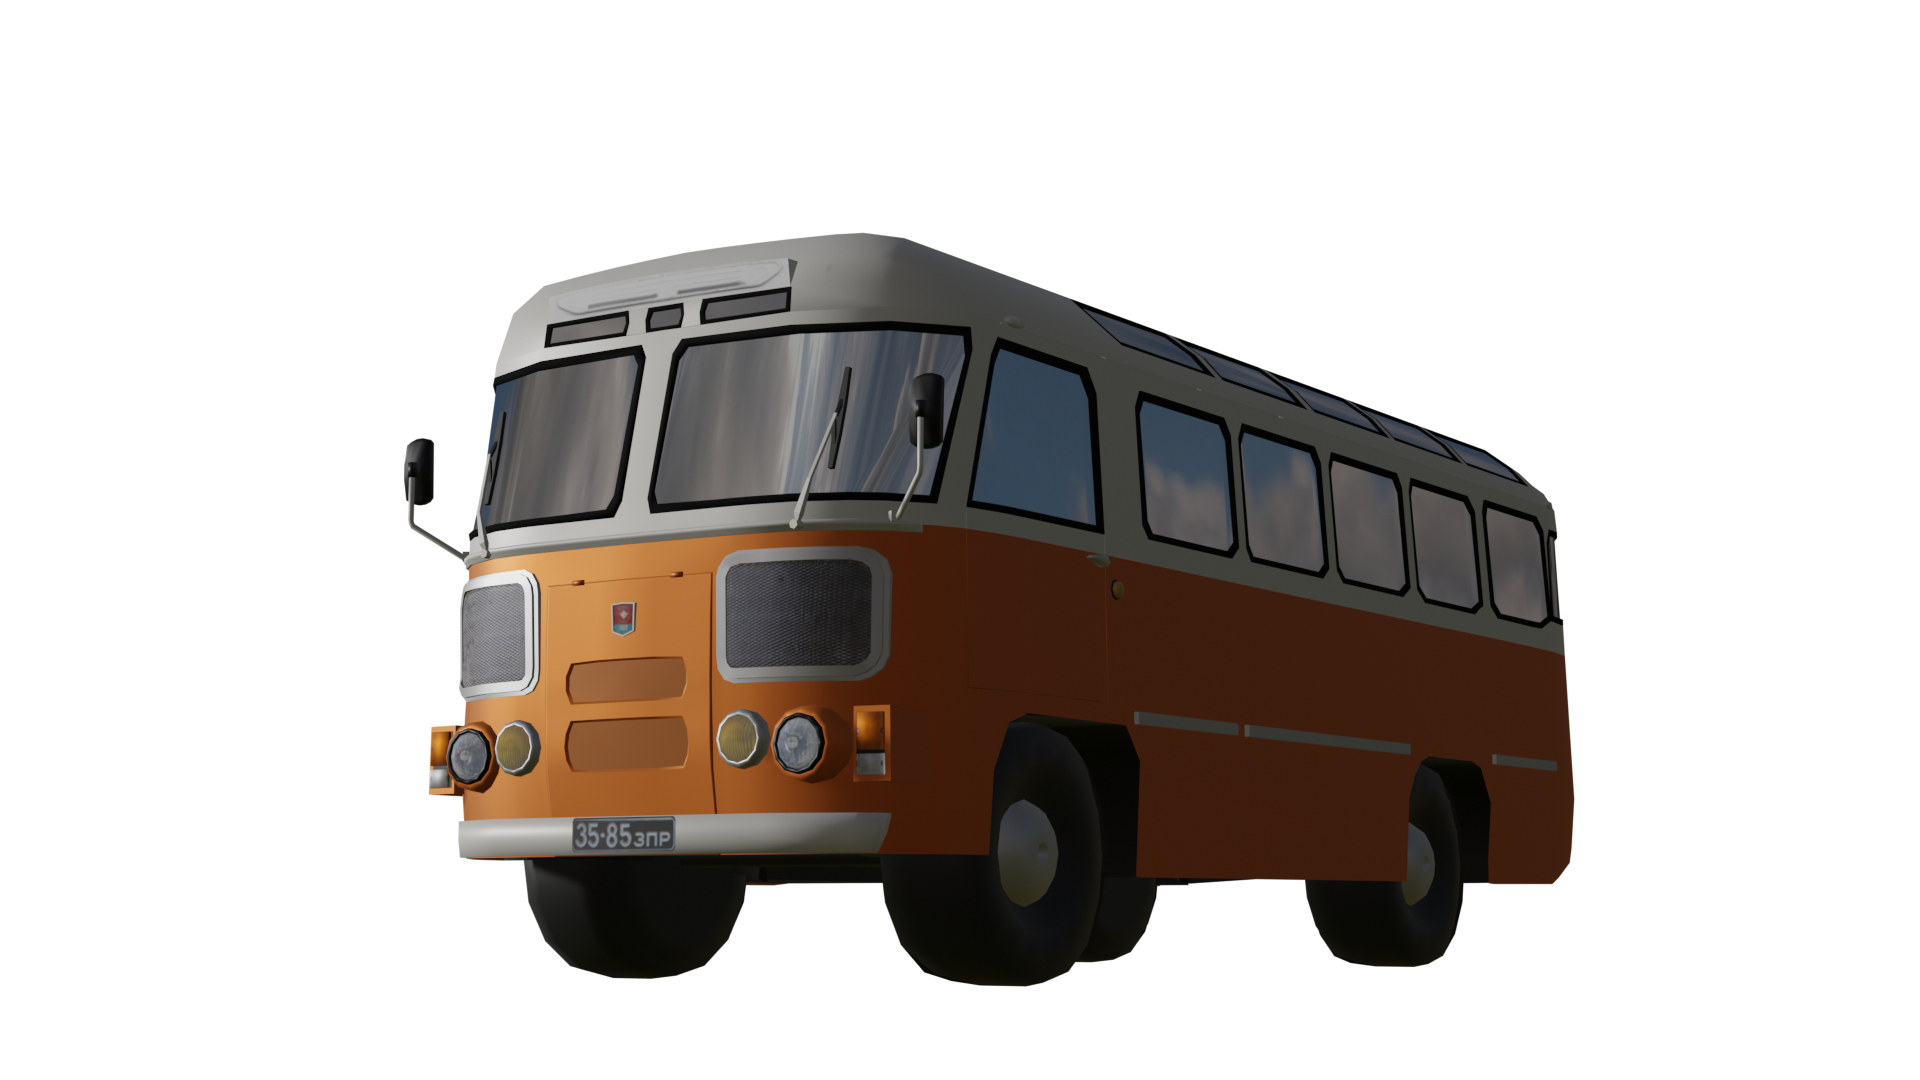 PAZ 672 soviet autobus Low-poly 3D model https://p.turbosquid.com/ts-thumb/38/TcMhlz/tn/imagename/png/1626980551/1920x1080/turn_fit_q99/2fb3b443944c1d51c2b09be0e21c7c34c2e0c8b2/imagename-1.jpg